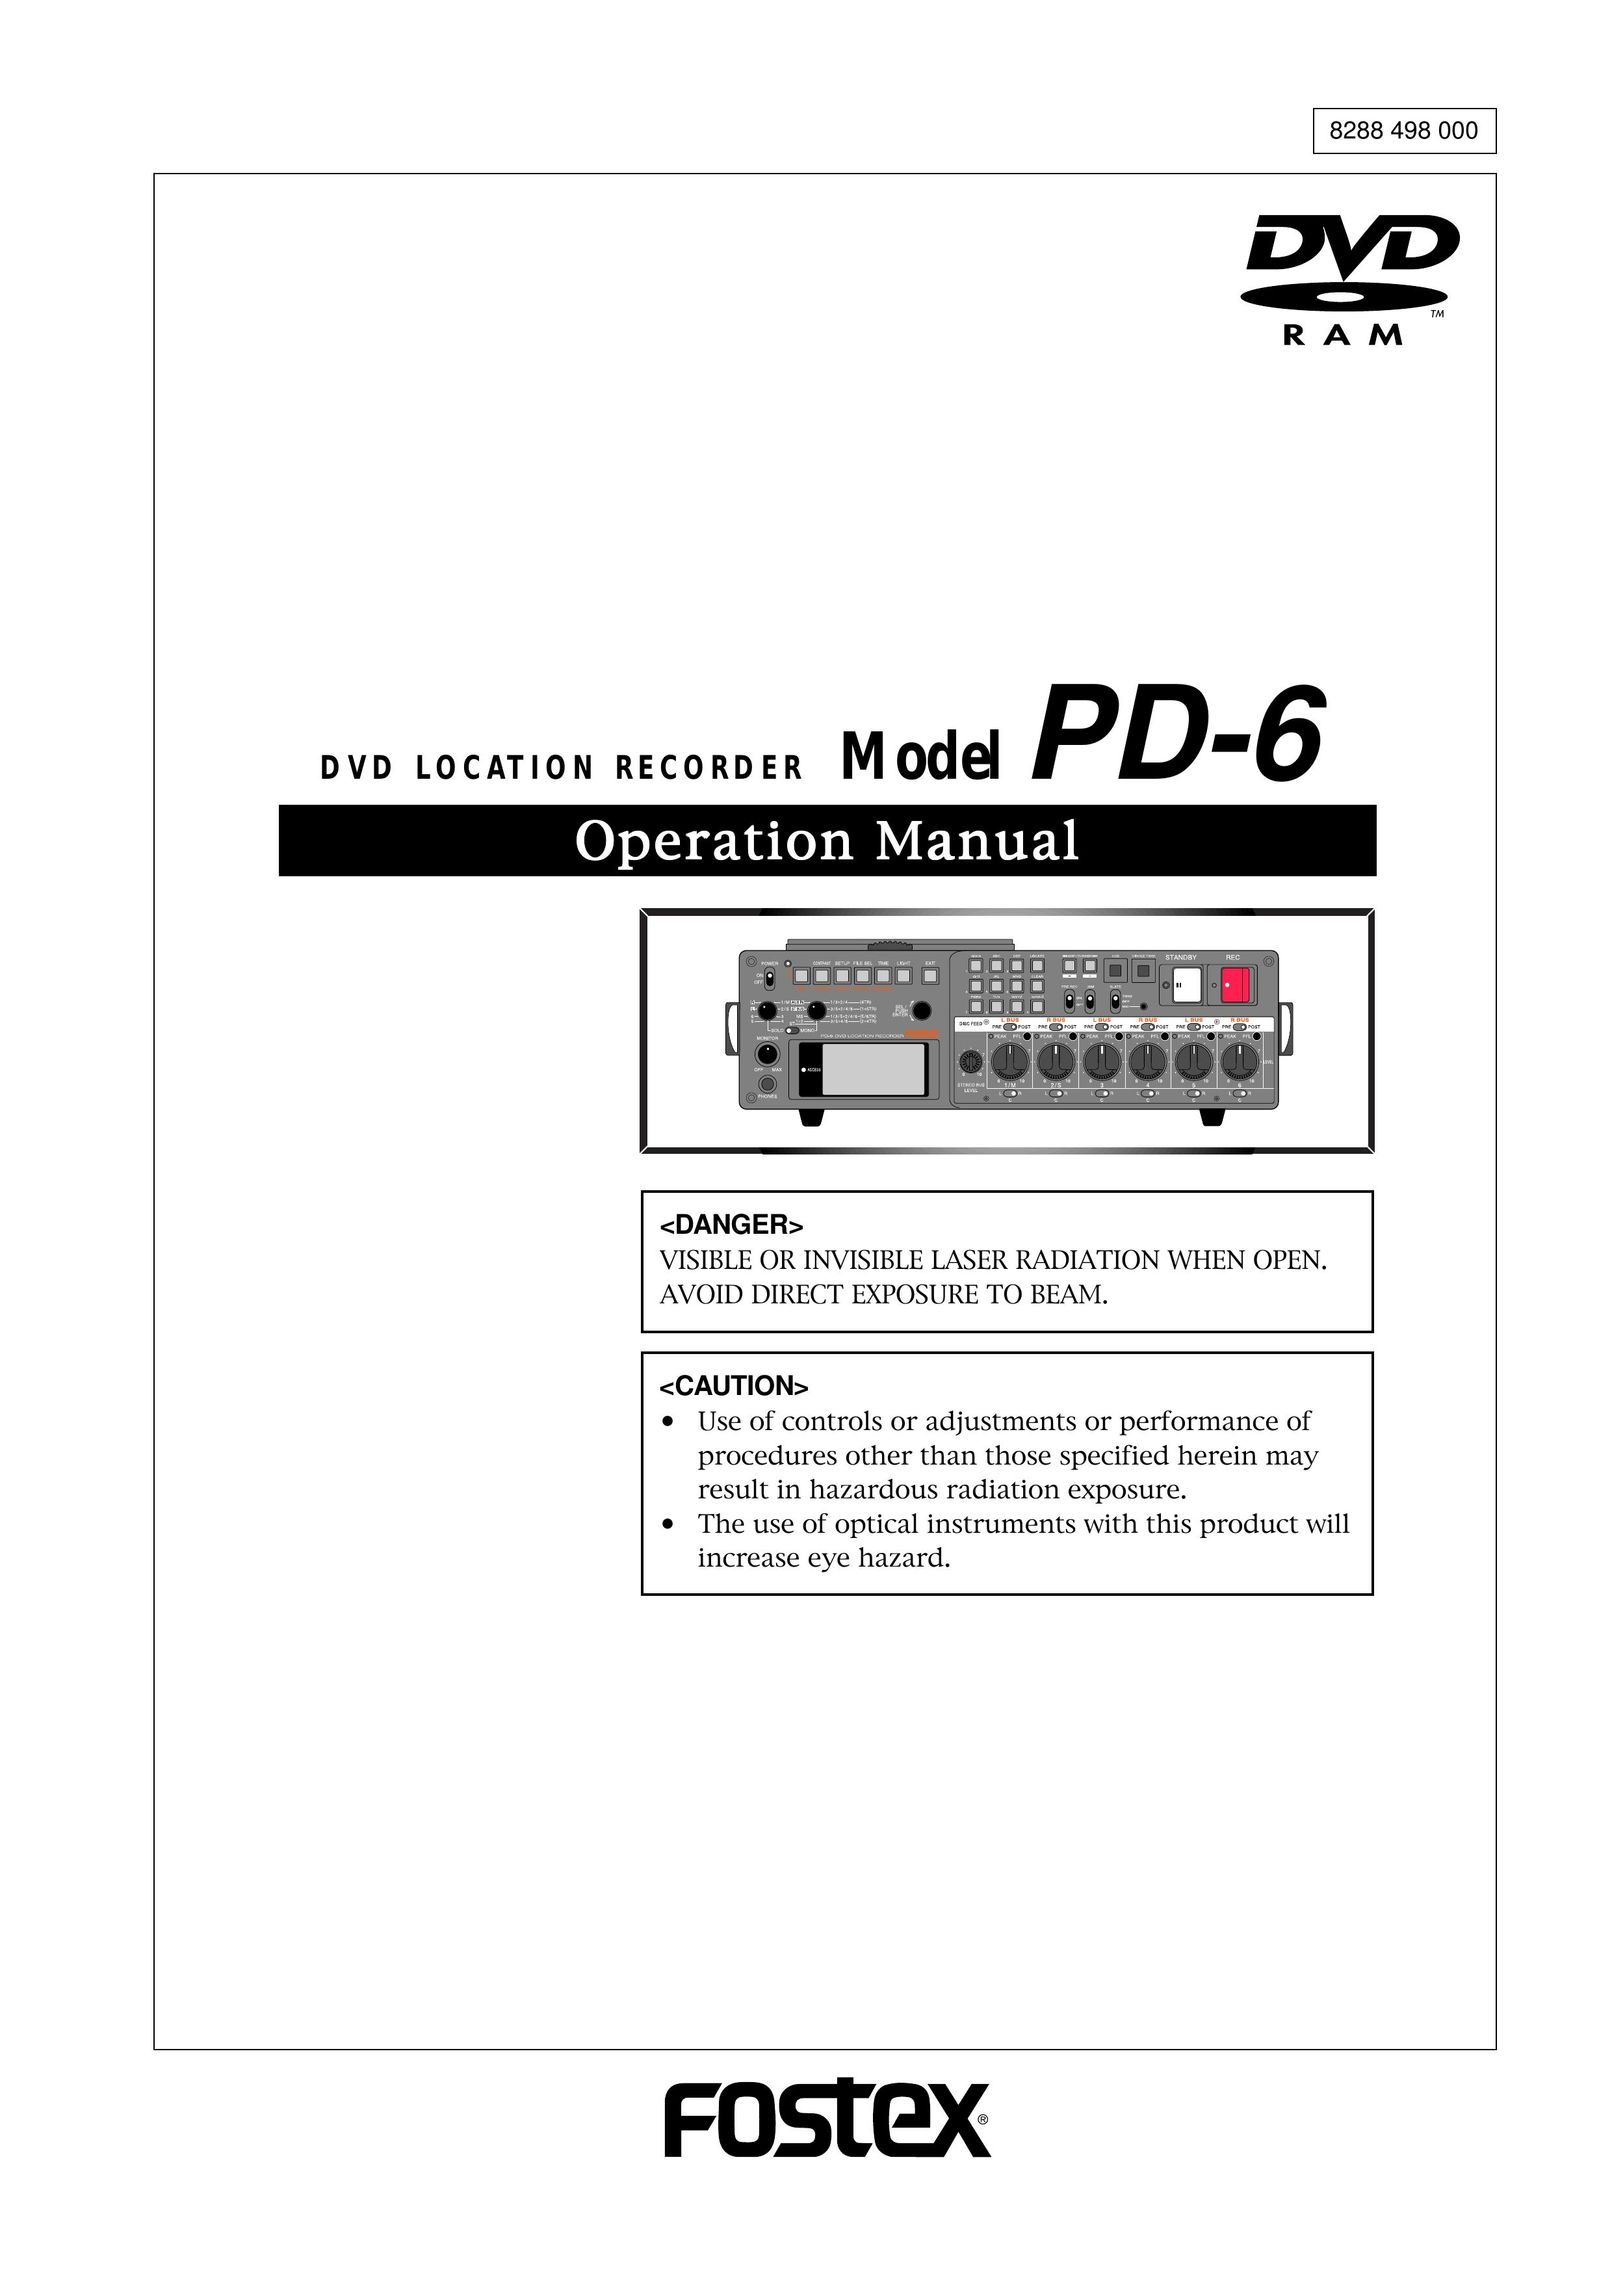 Fostex PD-6 DVD Recorder User Manual